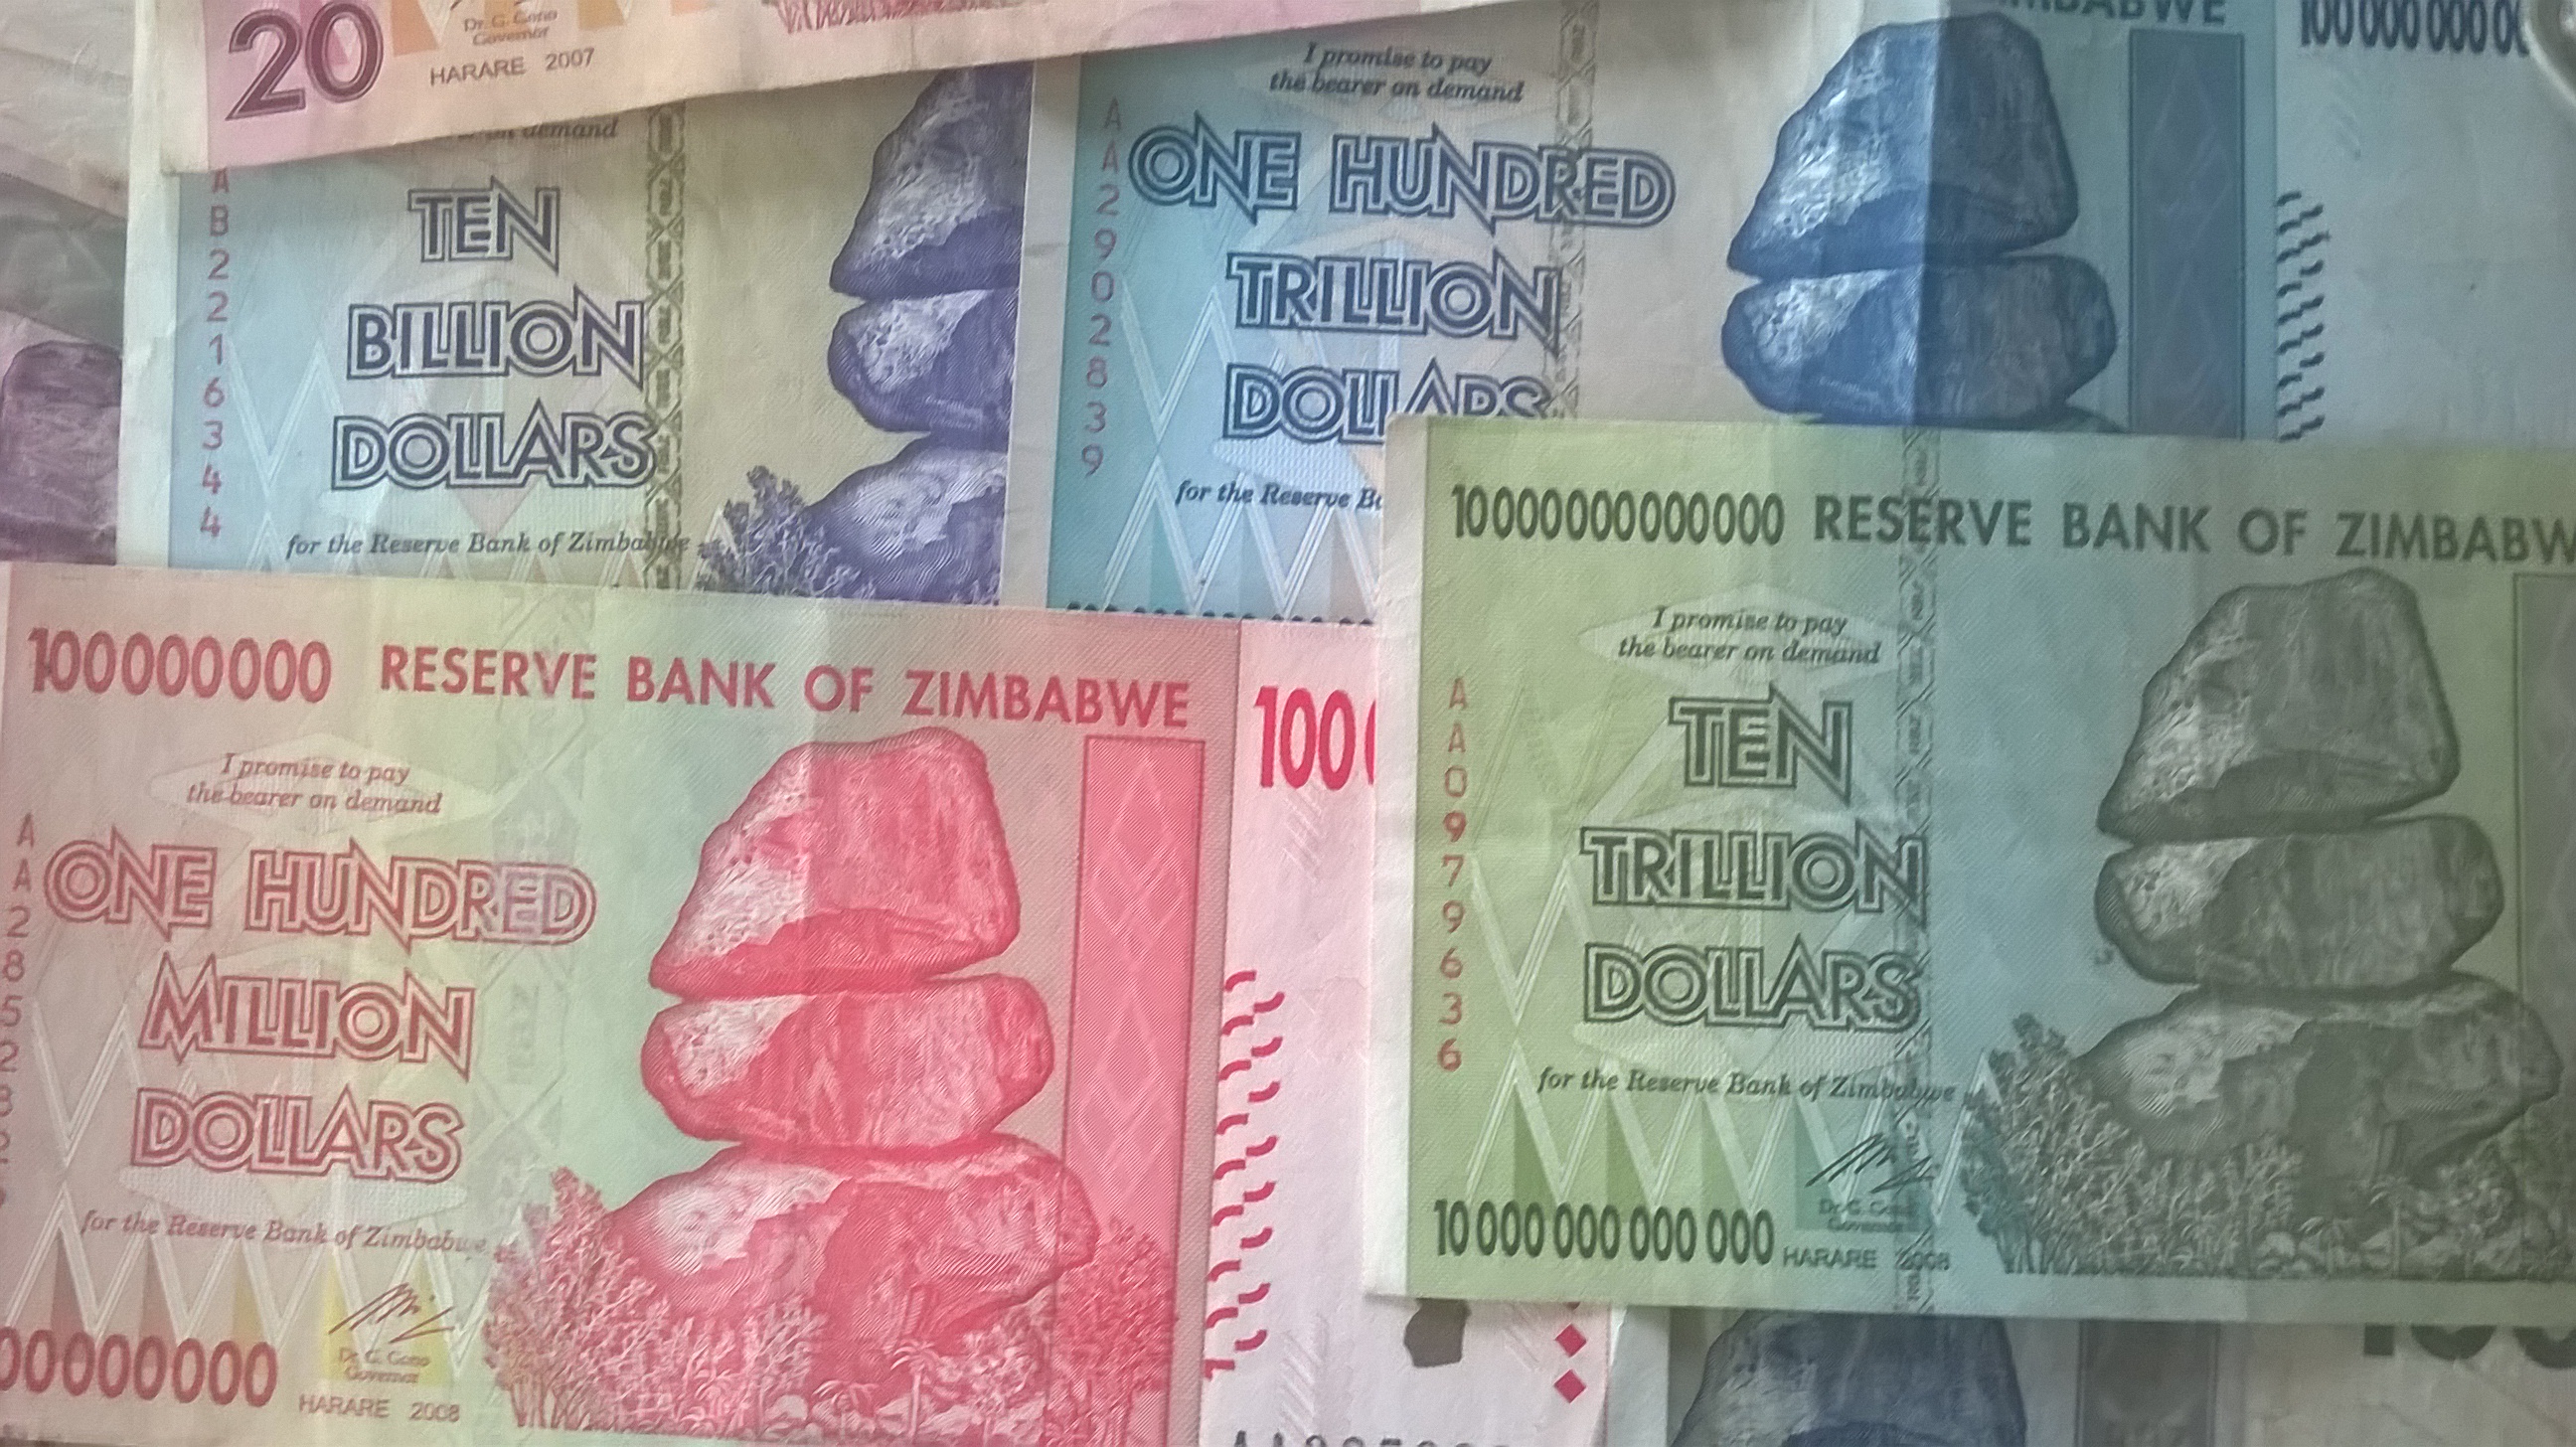 Simbabwe Inflation